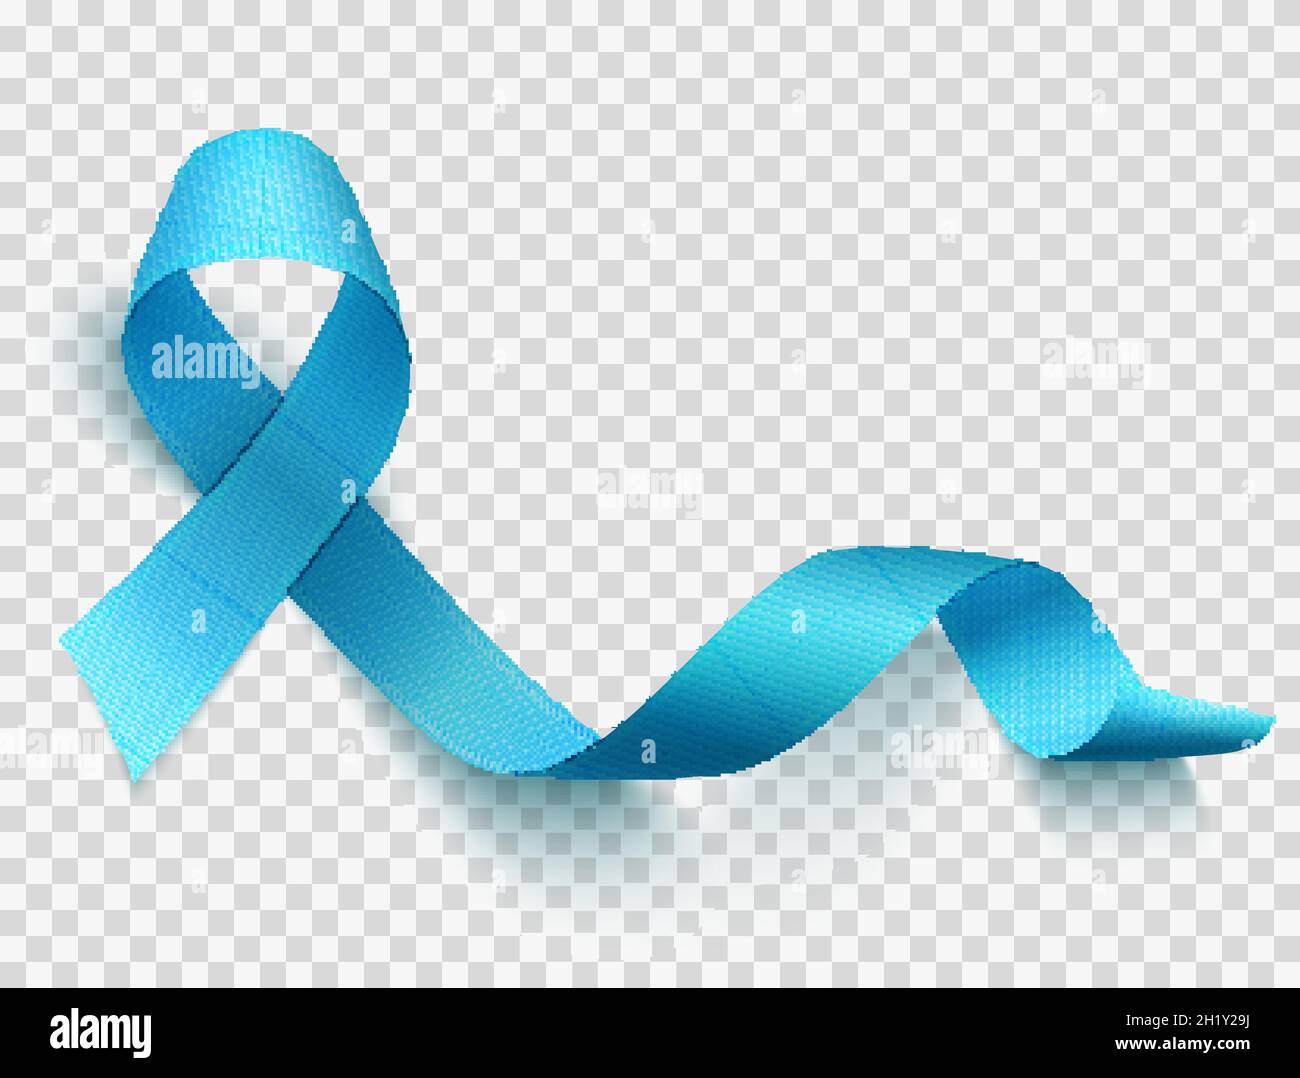 November light blue ribbon, Stock image